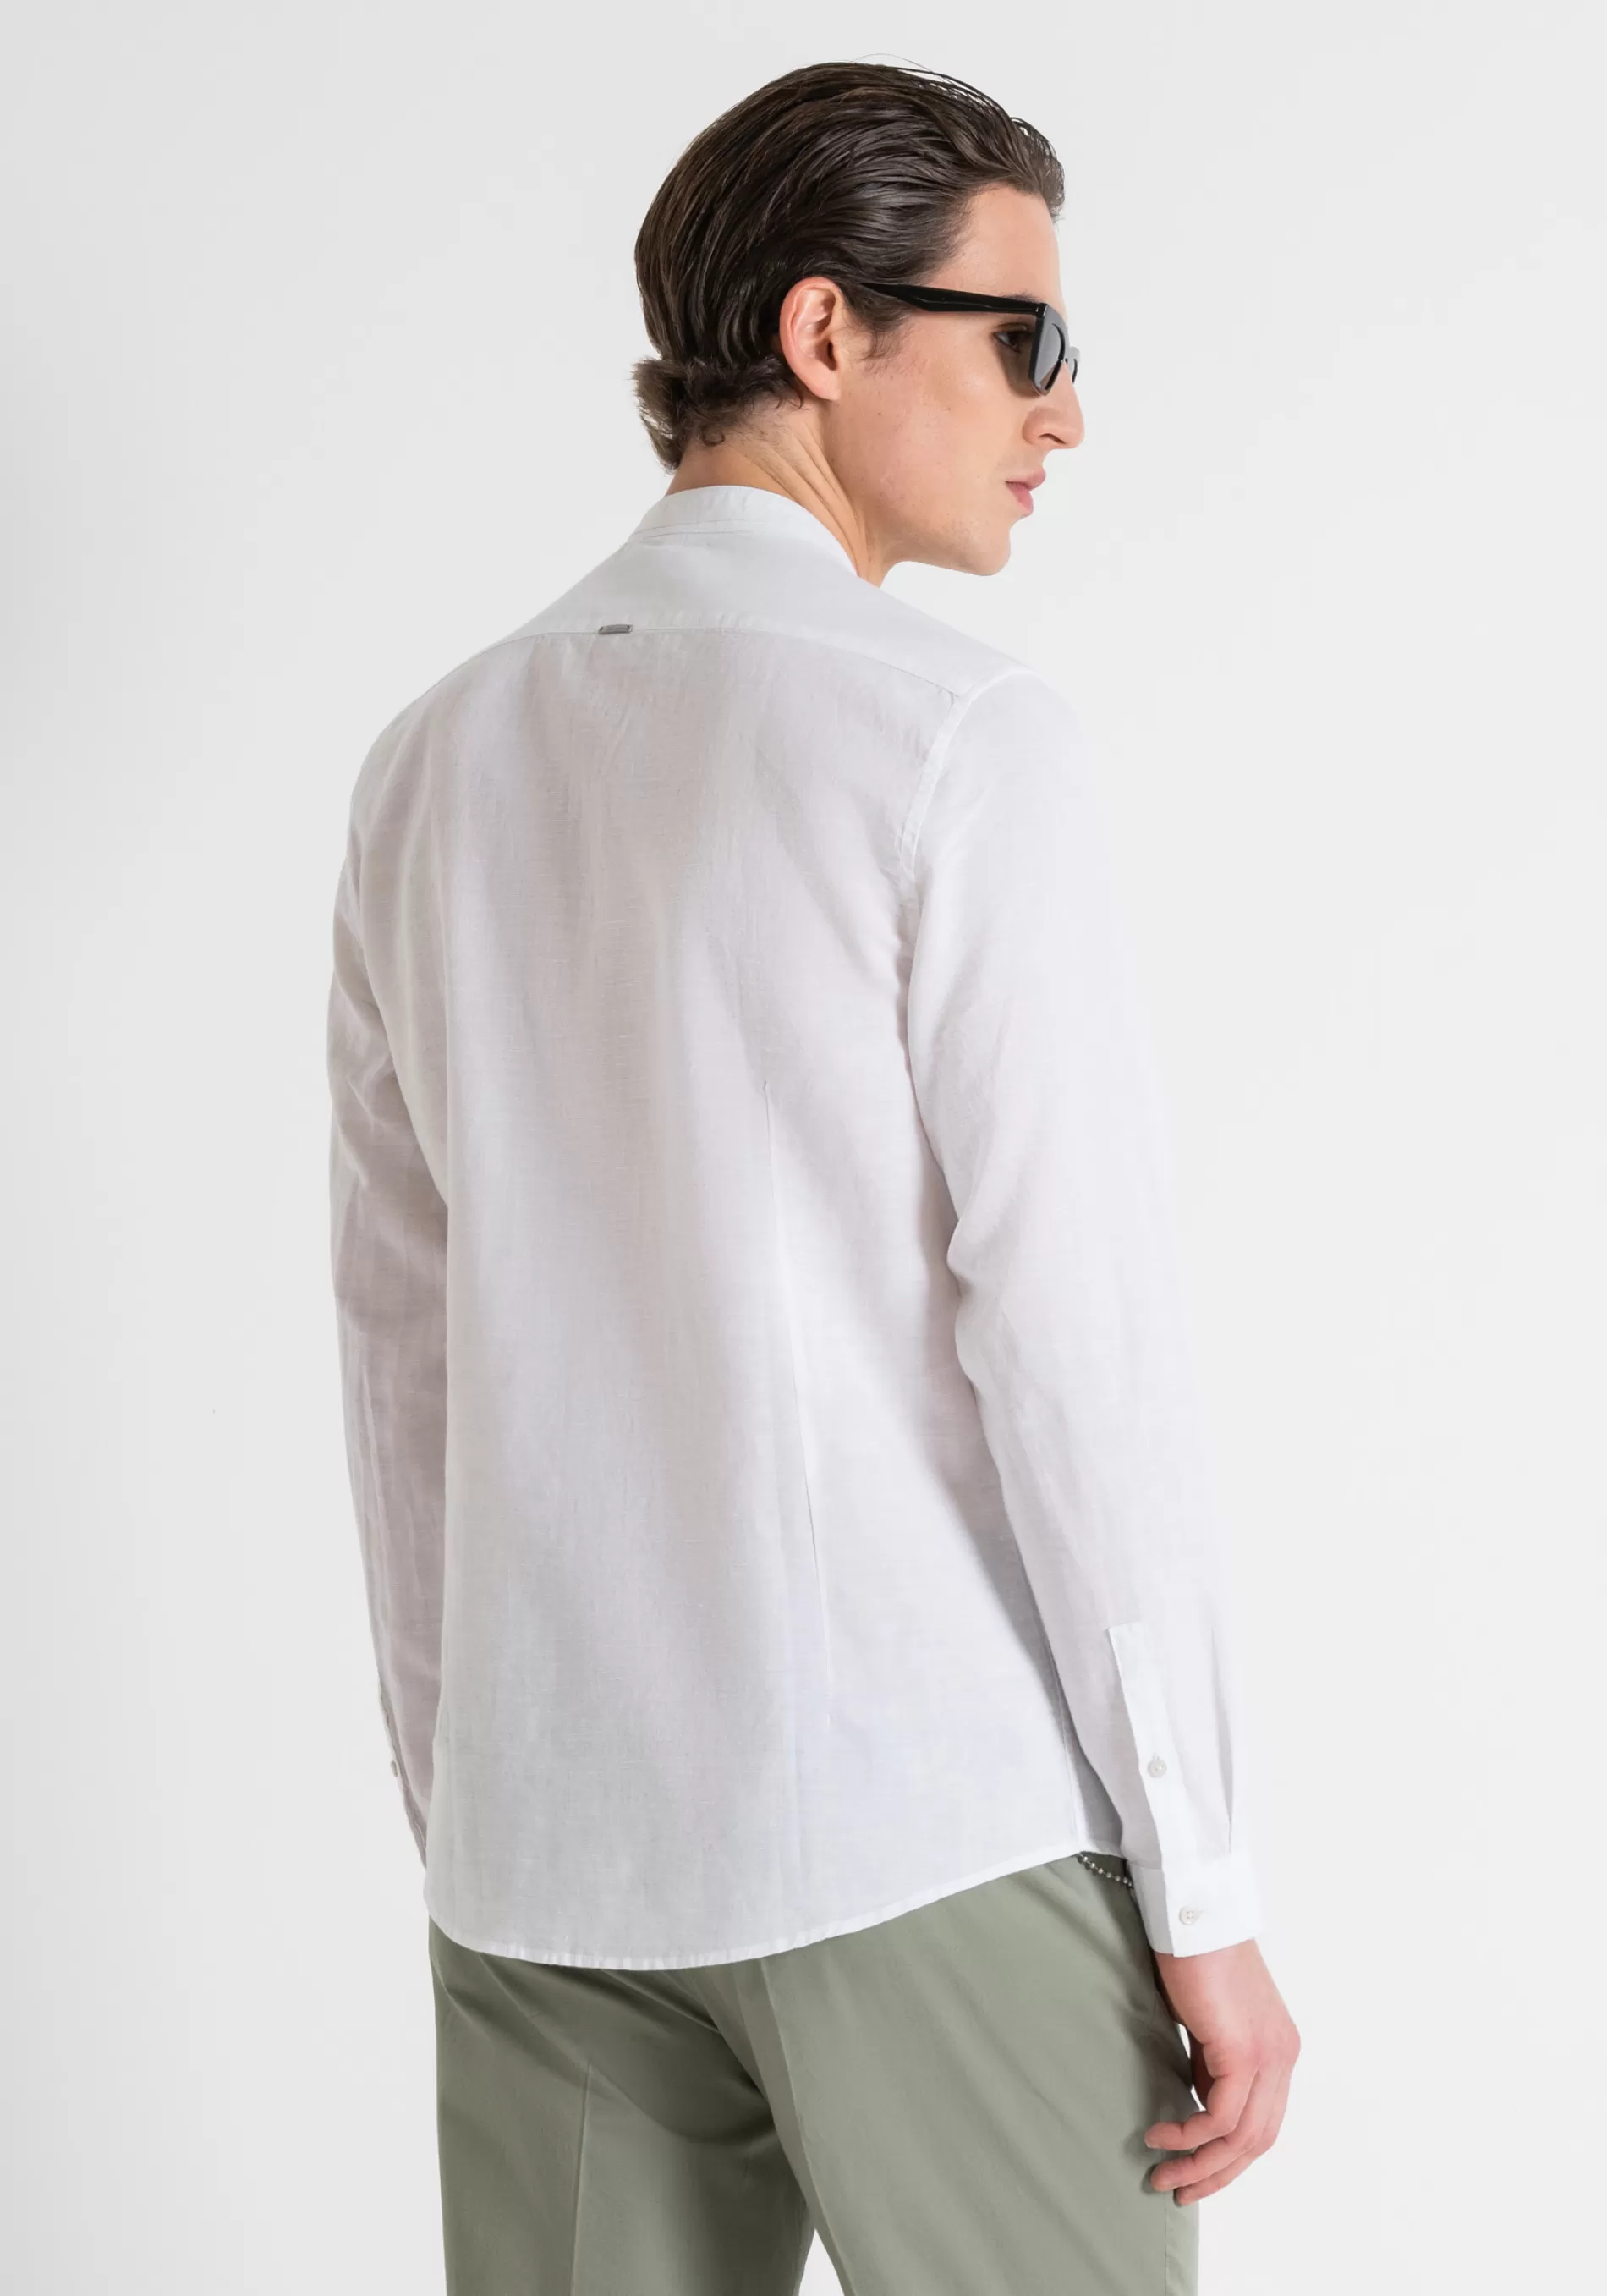 Best TOLEDO SLIM FIT SHIRT IN LINEN COTTON BLEND Shirts